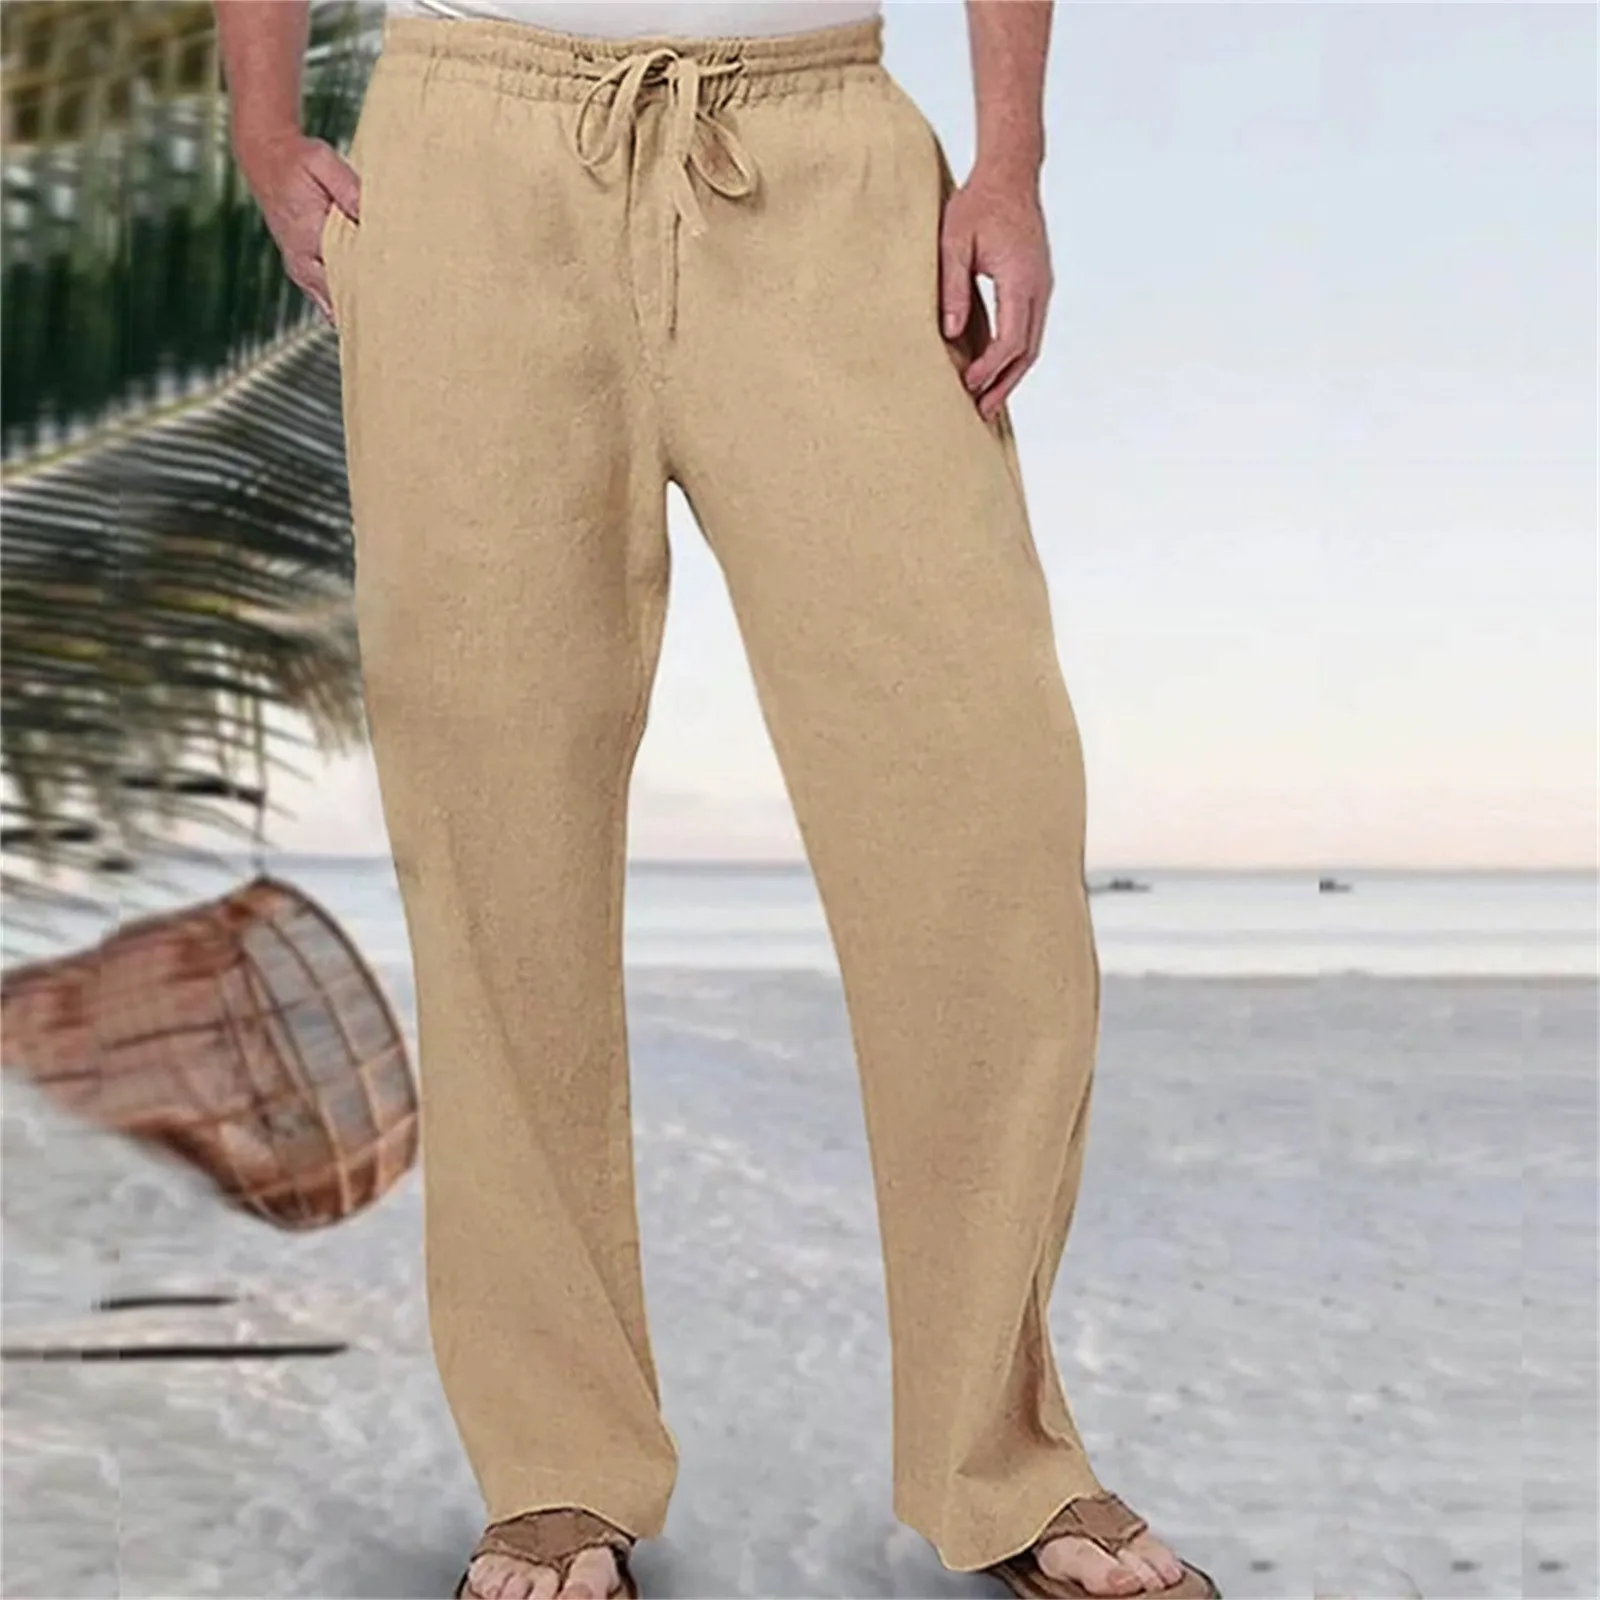 Groom's Linen Pants For Beach Weddings Island Importer, 51% OFF